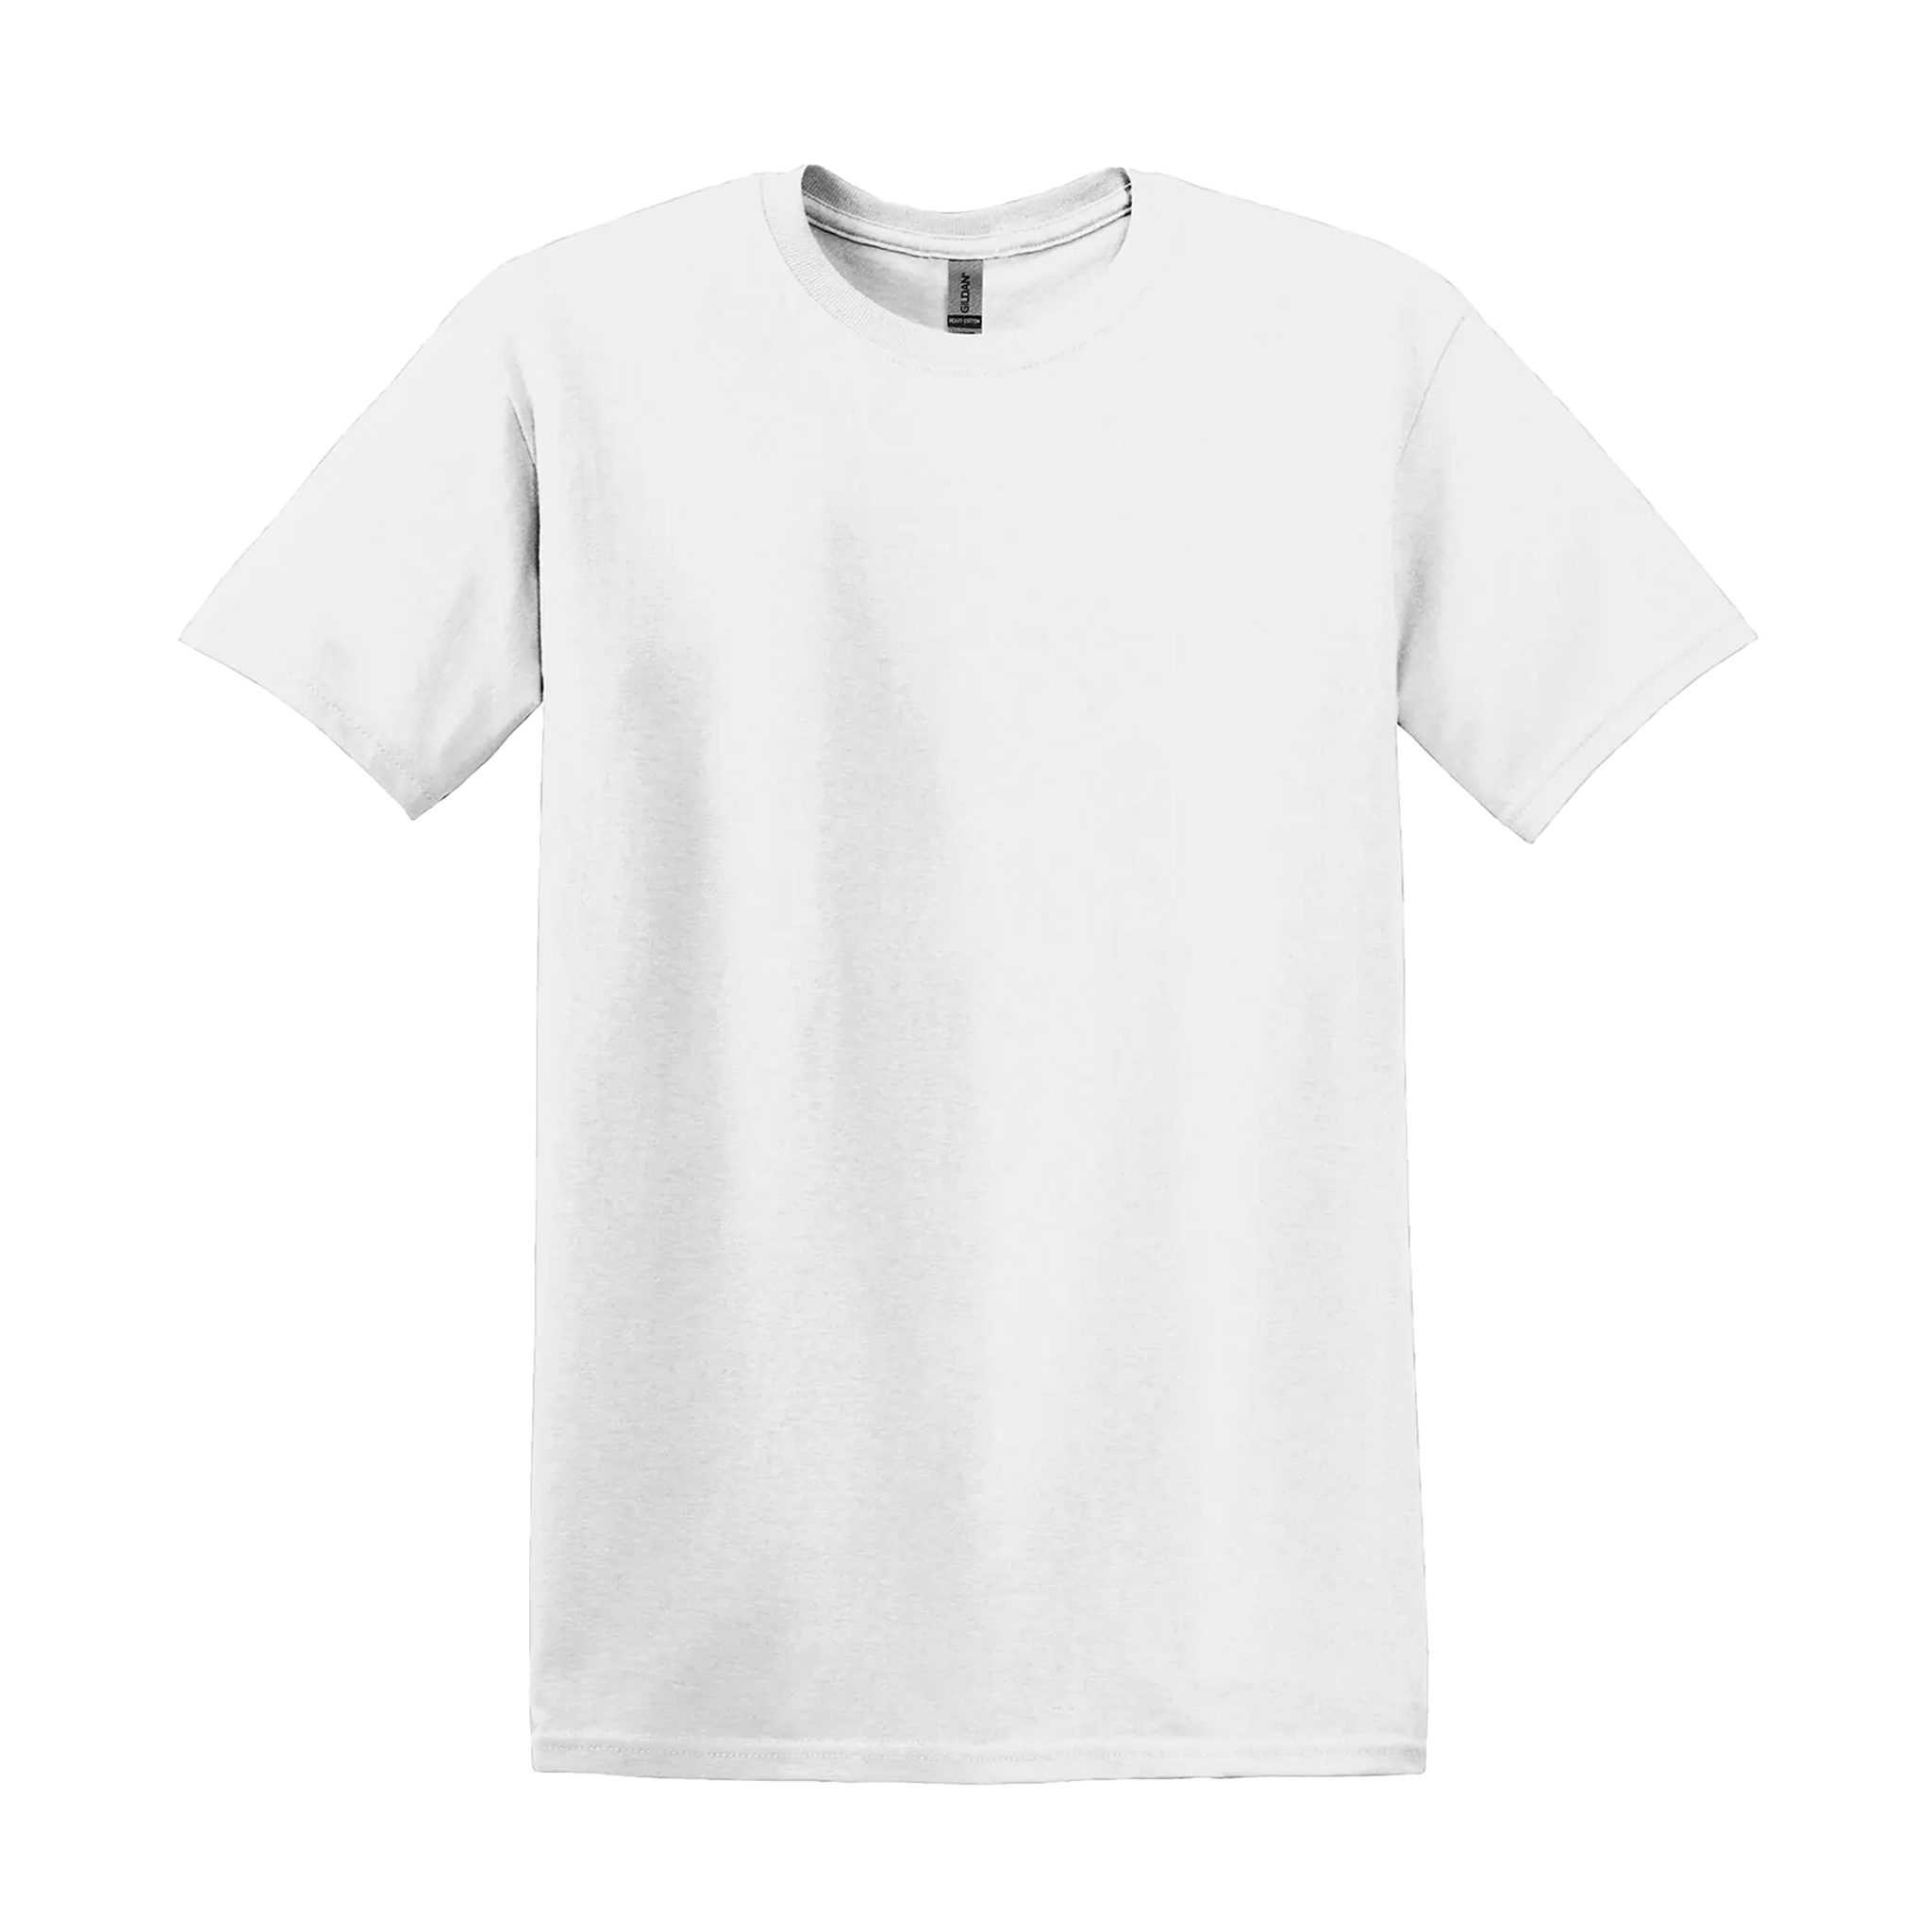 Gildan Softstyle T-Shirt - Men's Sizing XS-4XL - White